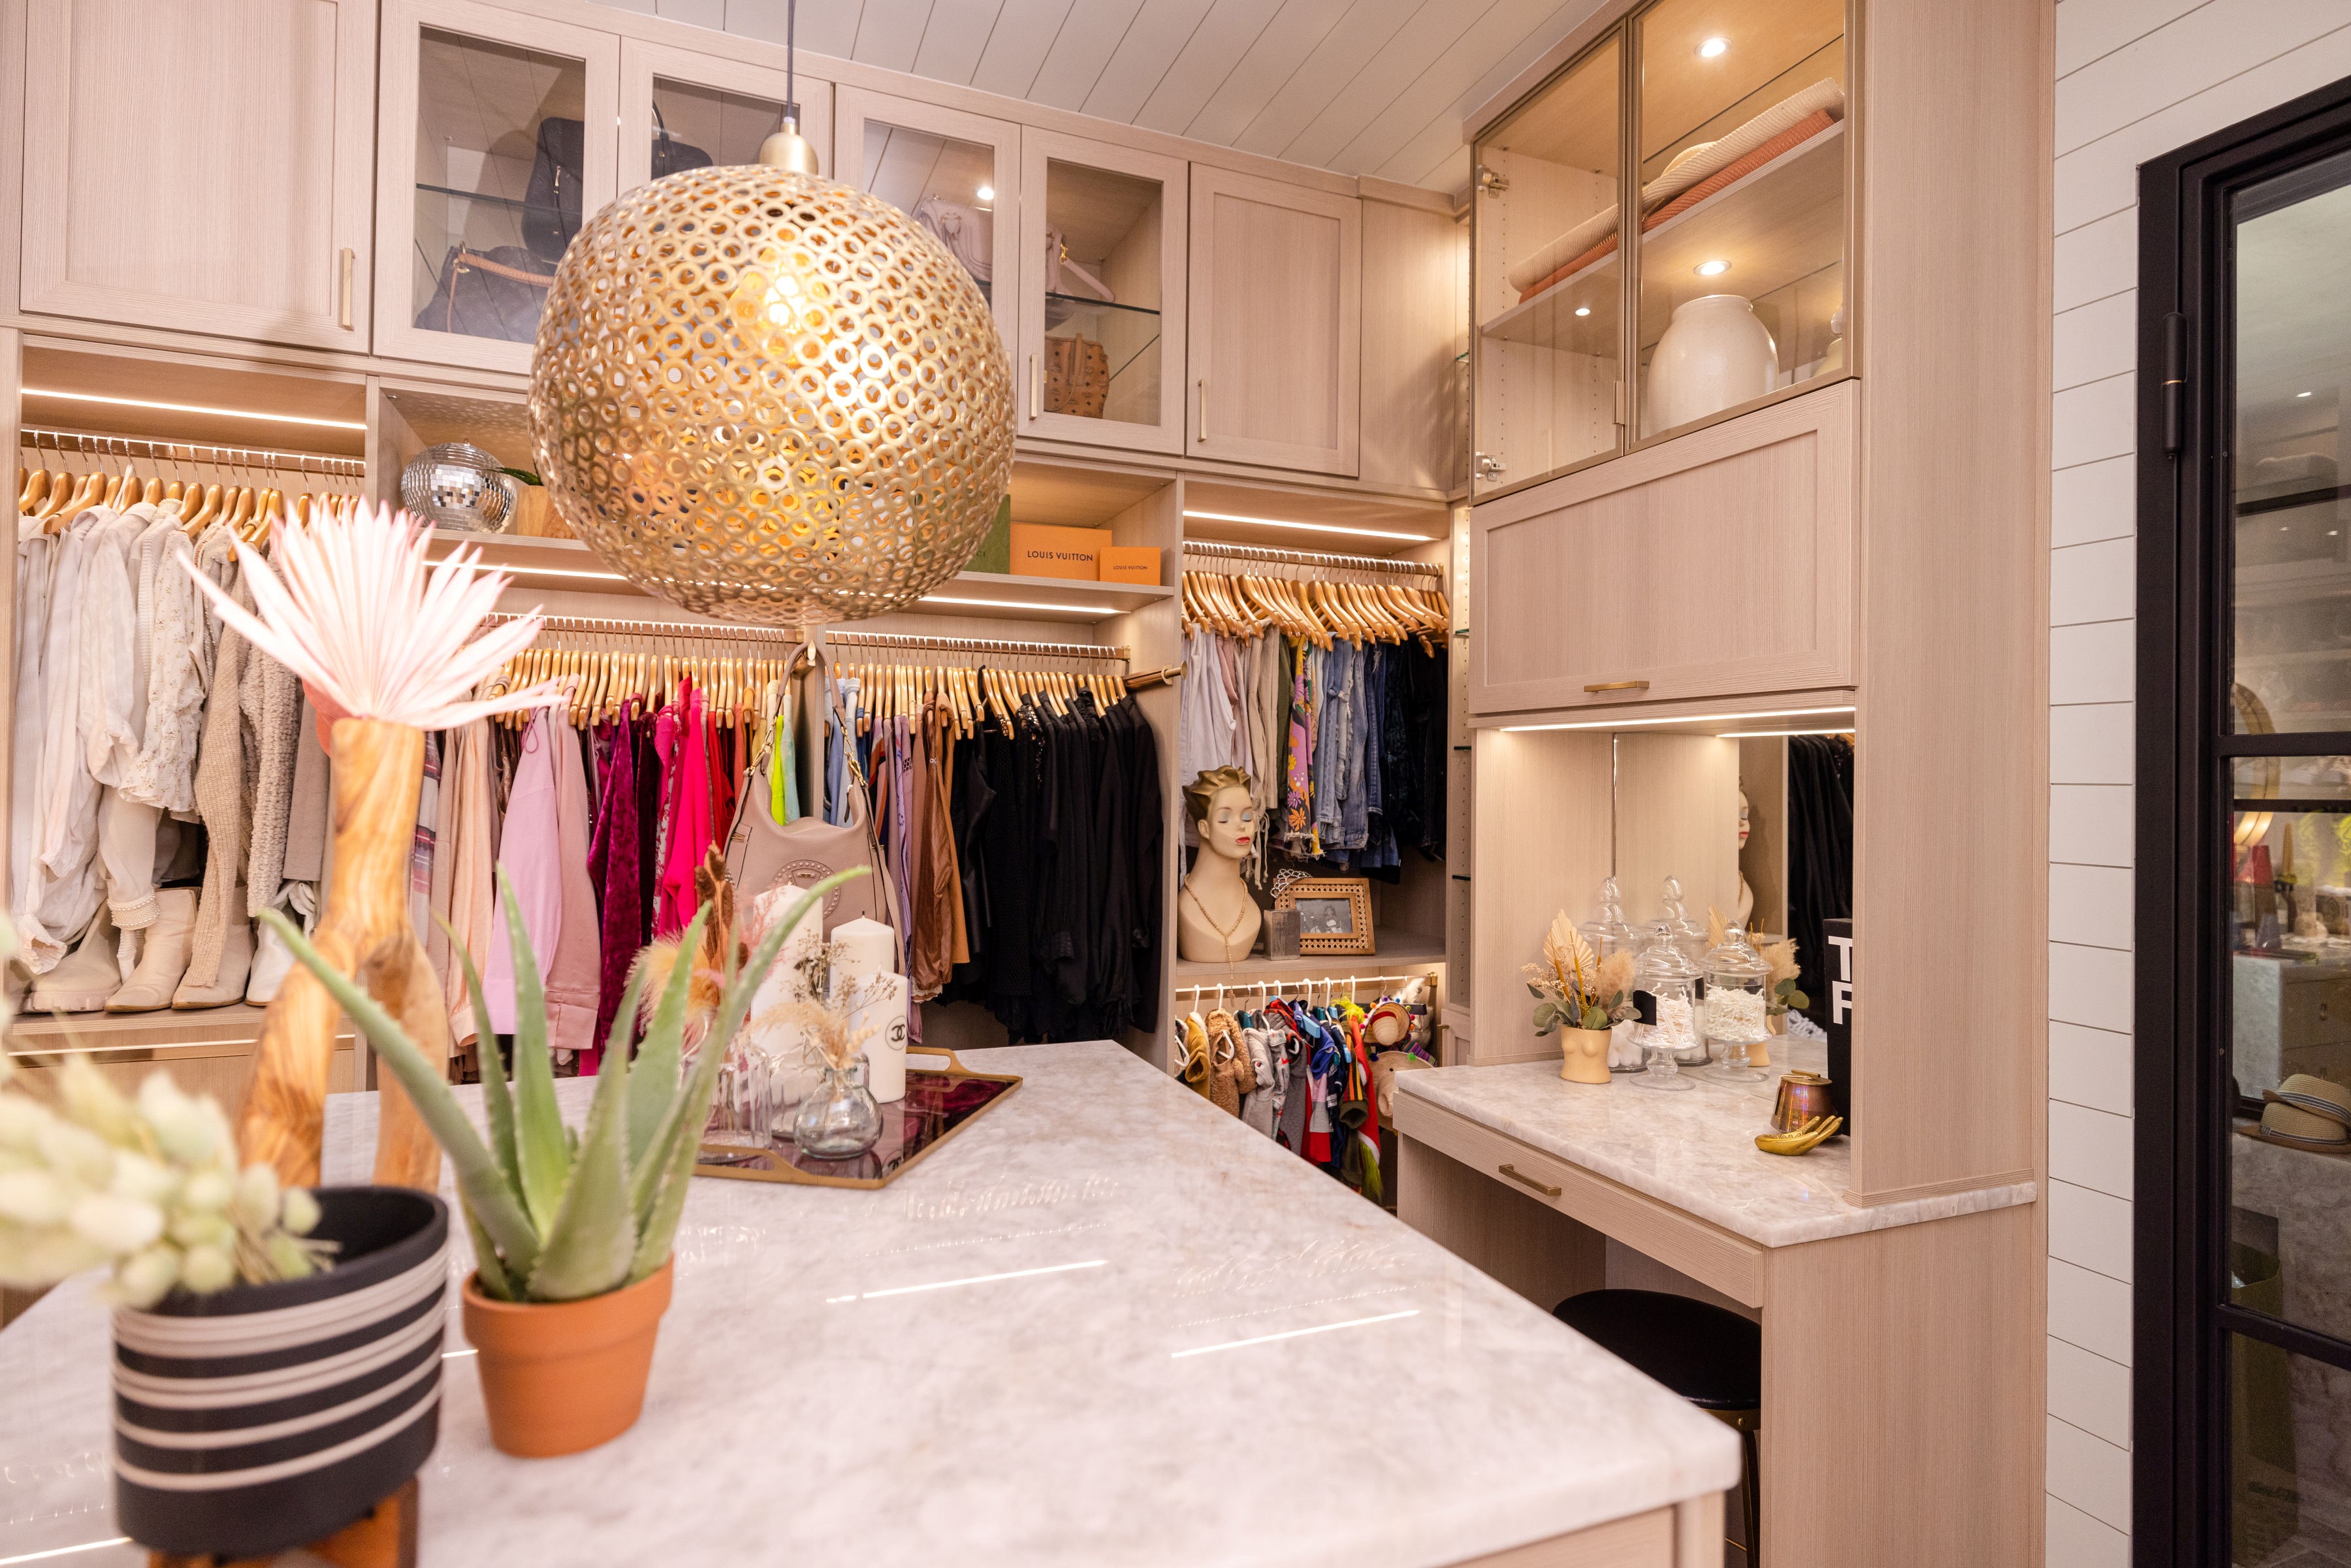 When high fashion meets luxe closet design